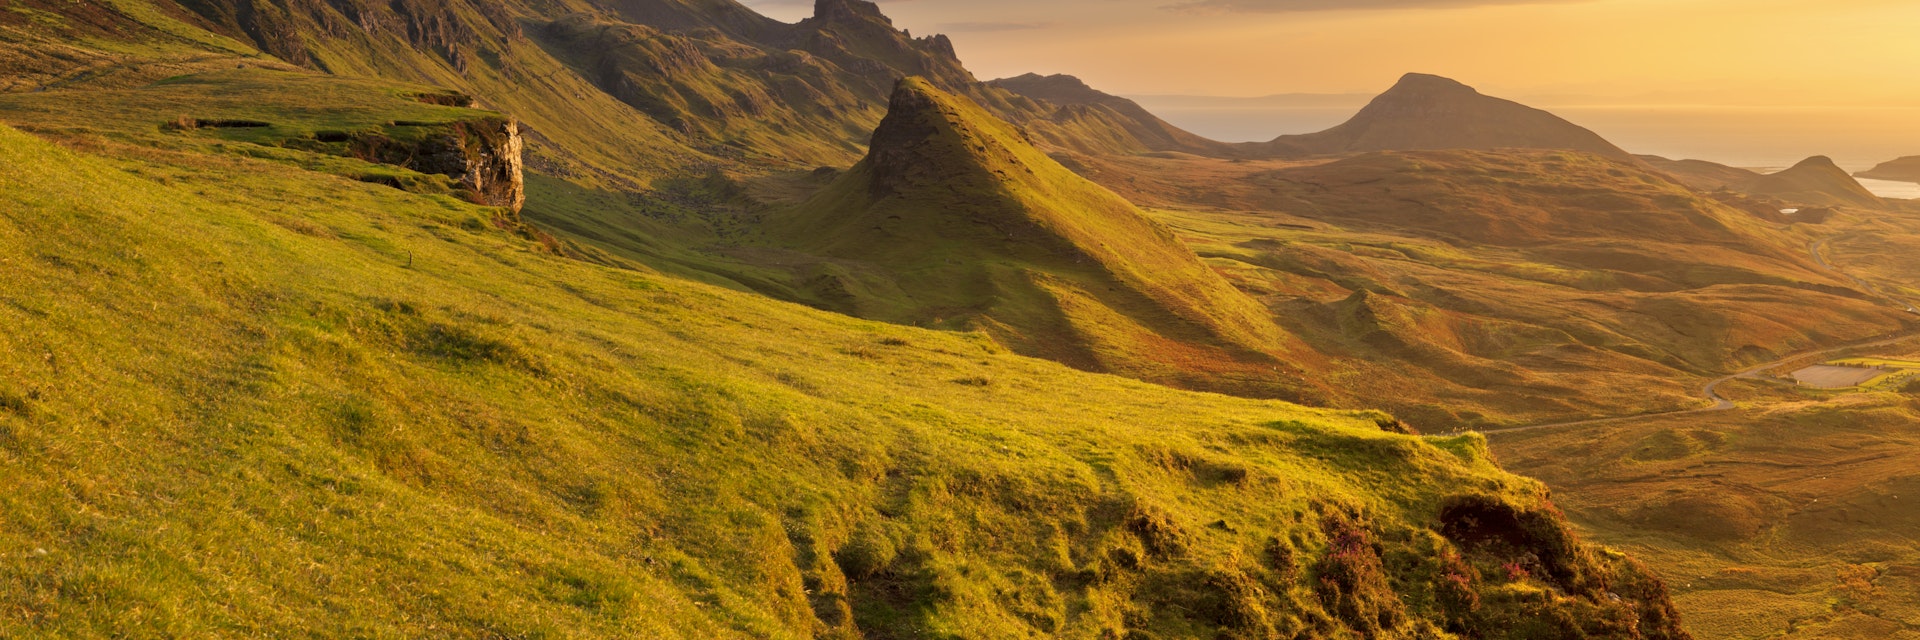 Beautiful light at Quiraing, Isle of Skye, Scotland. A seamlessly stitched panoramic image.